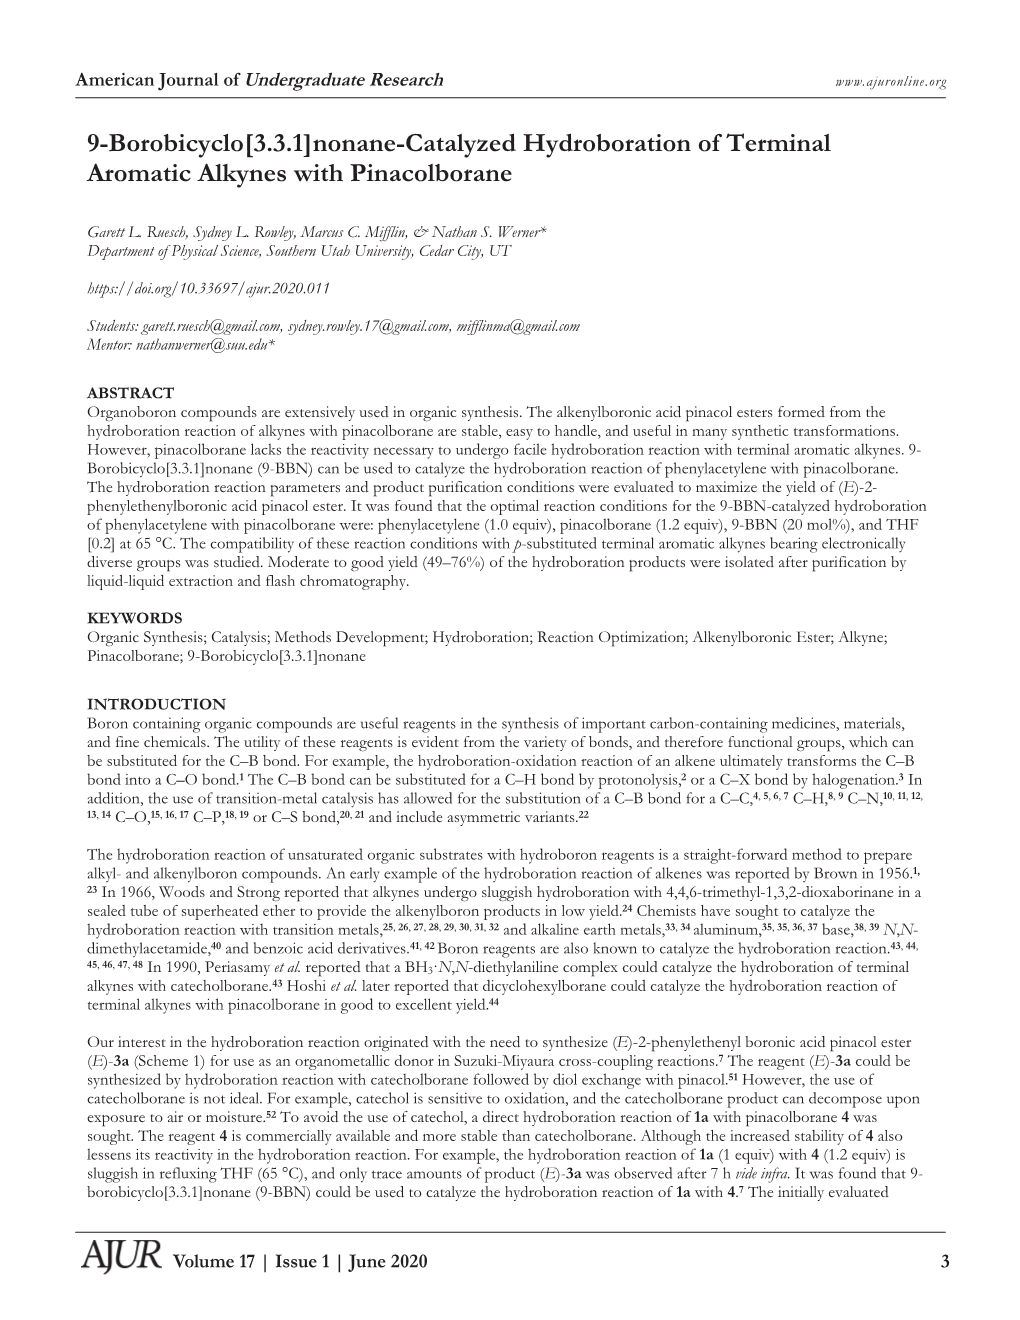 Nonane-Catalyzed Hydroboration of Terminal Aromatic Alkynes with Pinacolborane